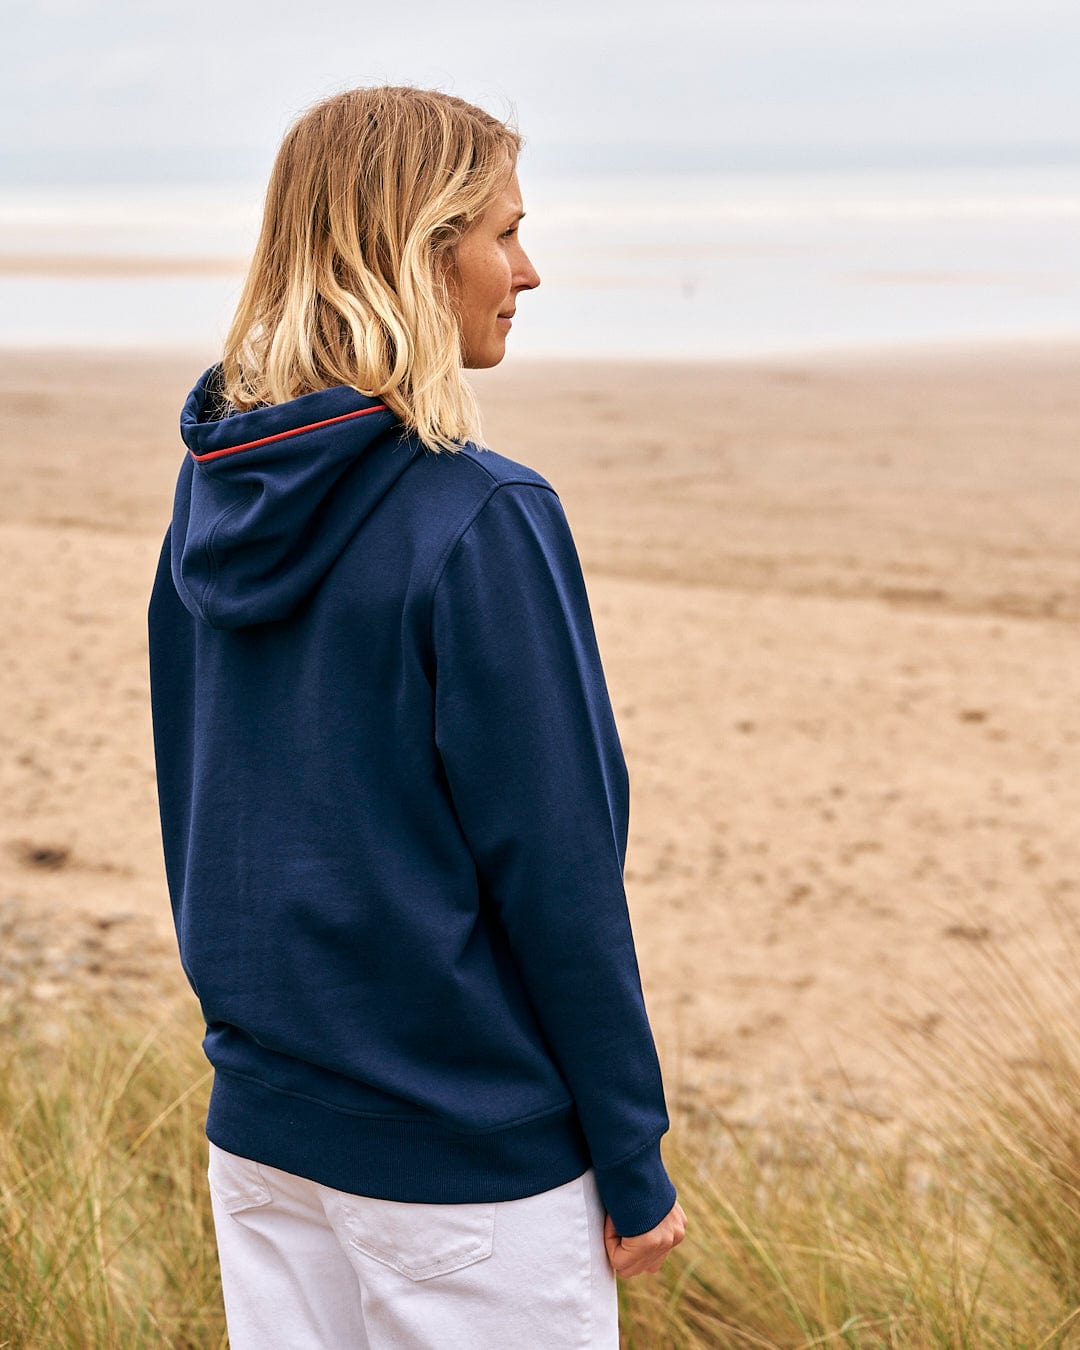 a woman wearing a Saltrock Celeste Pipe - Womens Pop Hoodie - Blue looking at the beach.